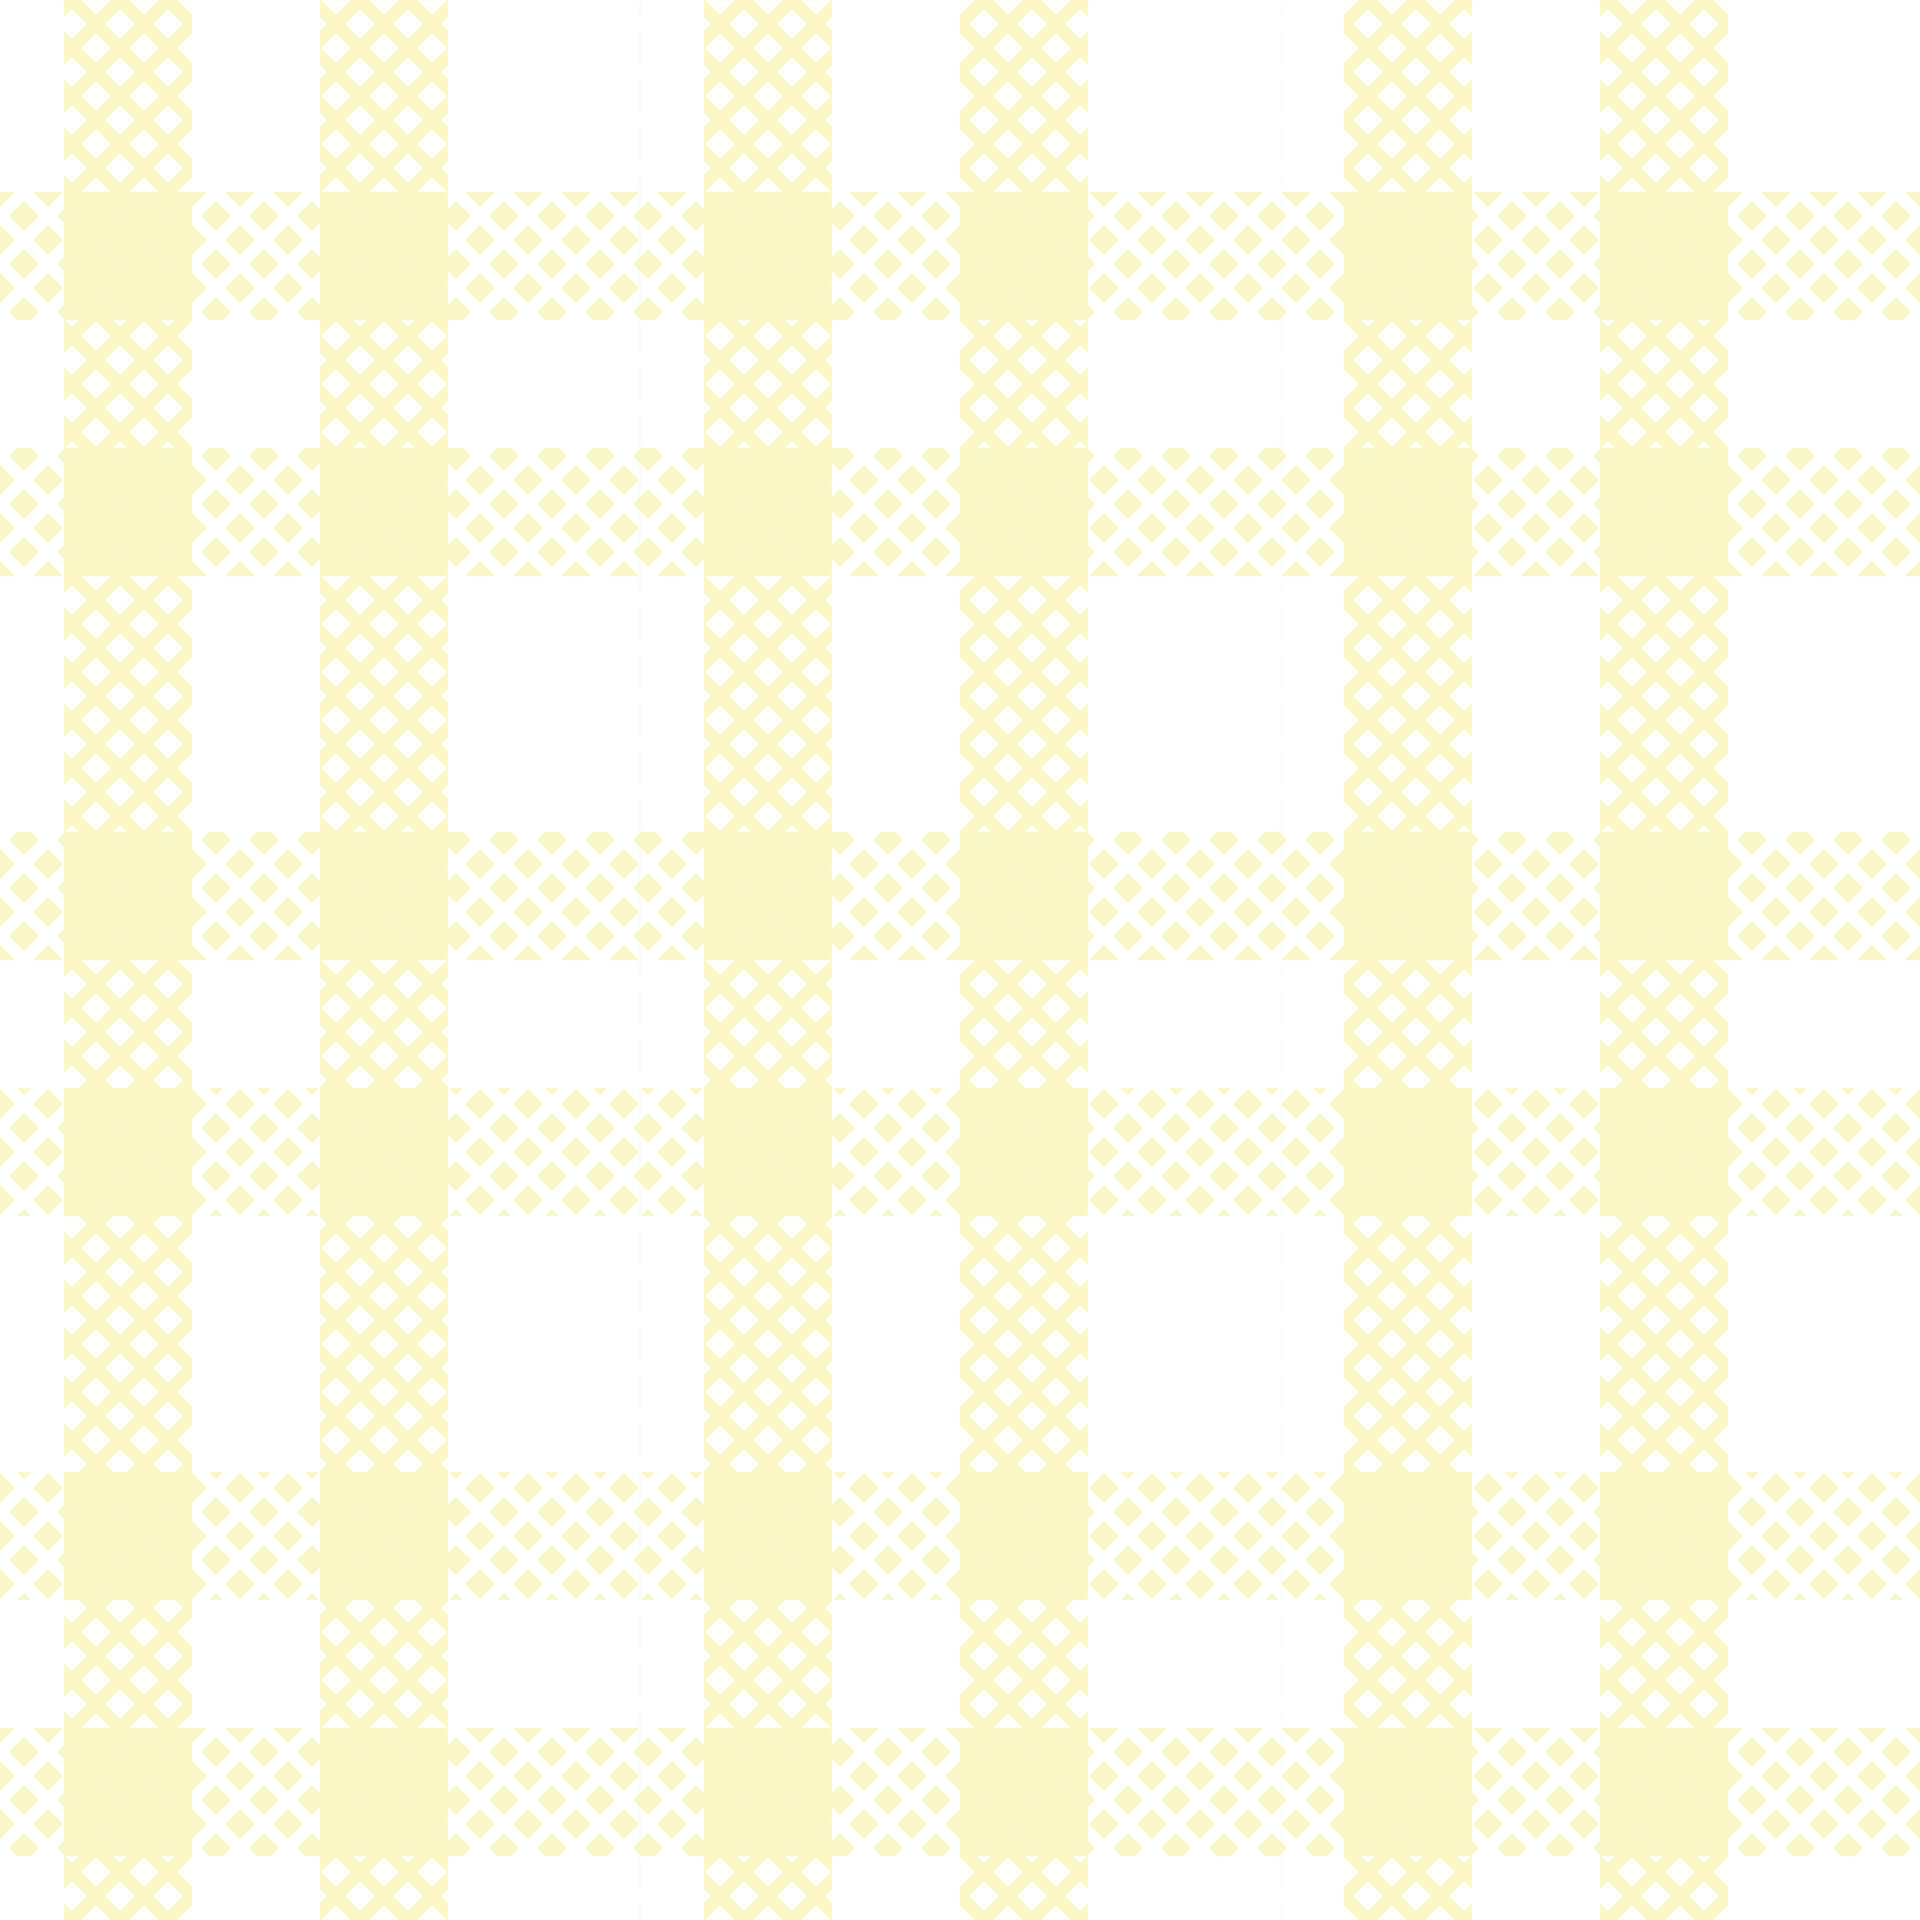 Plaid Patterns Seamless. Traditional Scottish Checkered Background ...